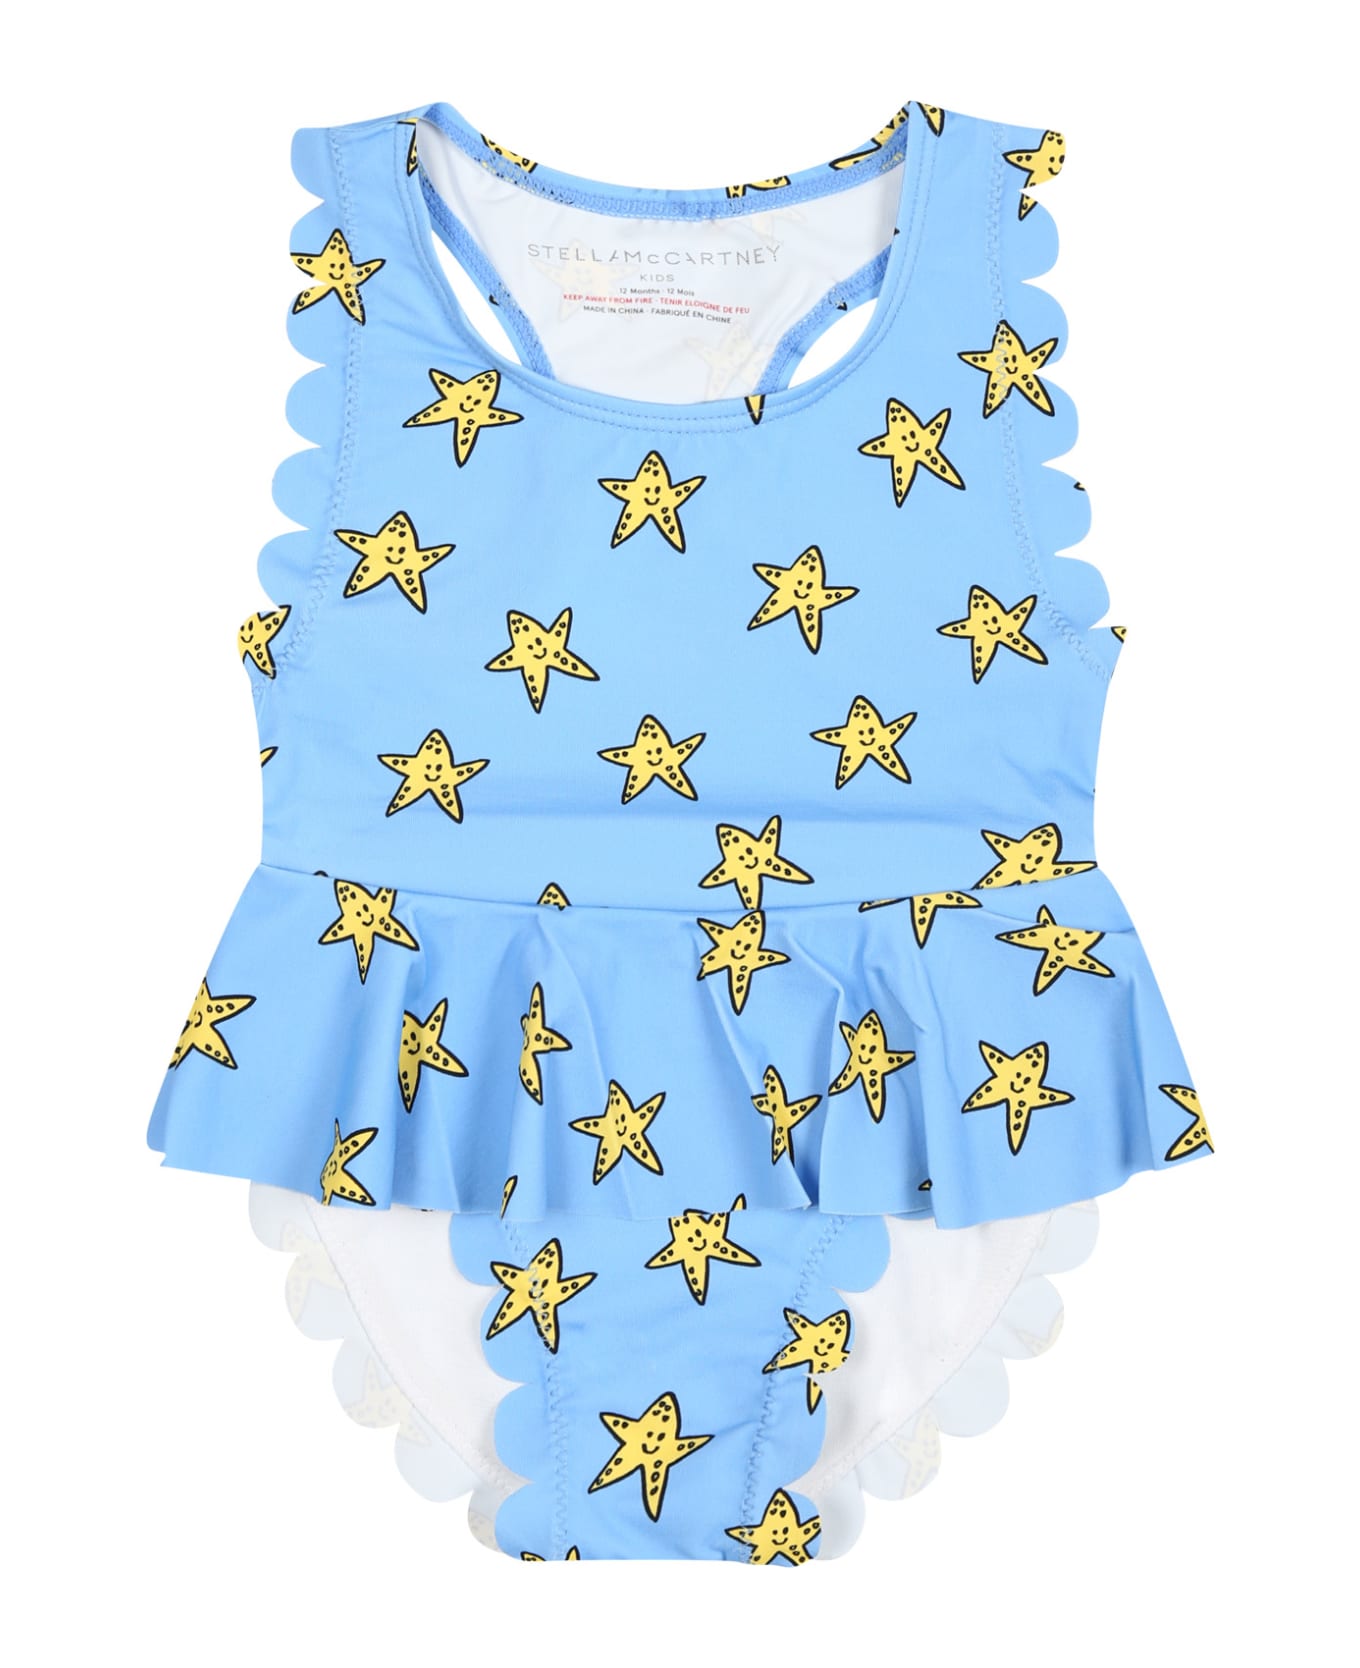 Stella McCartney Kids Light Blue Swimsuit For Baby Girl With Starfishes - Light Blue